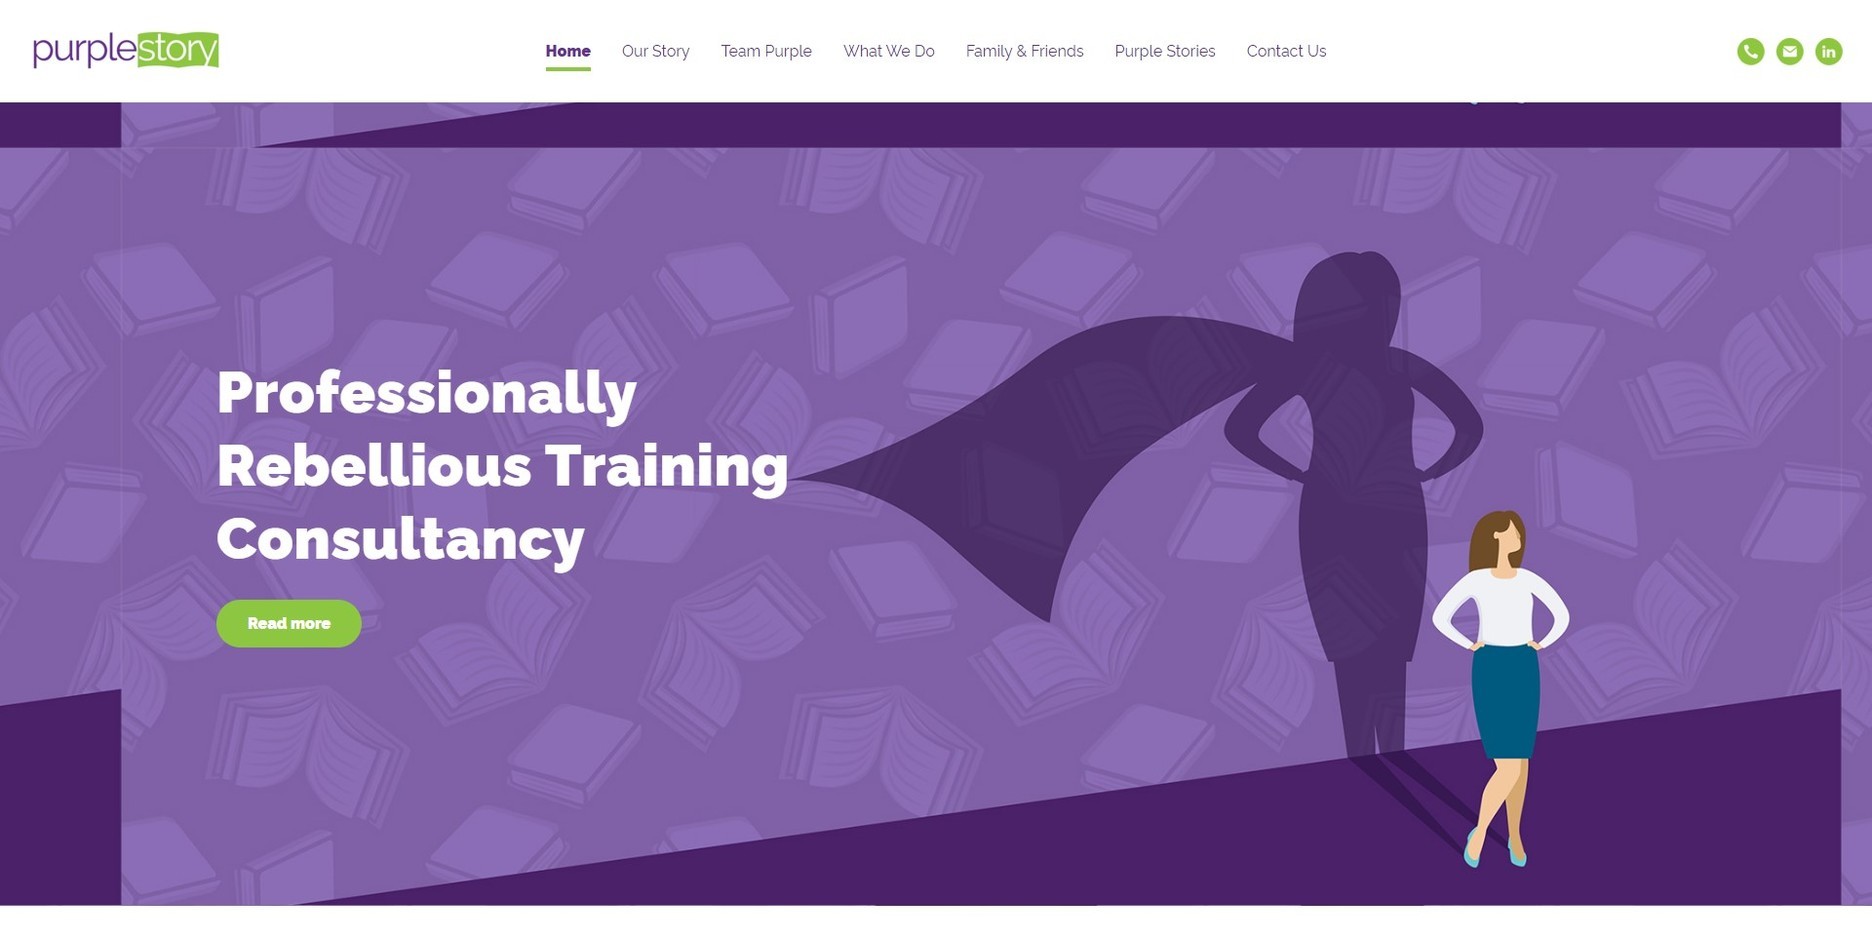 The new Purple Story website, designed by it'seeze, shown on desktop